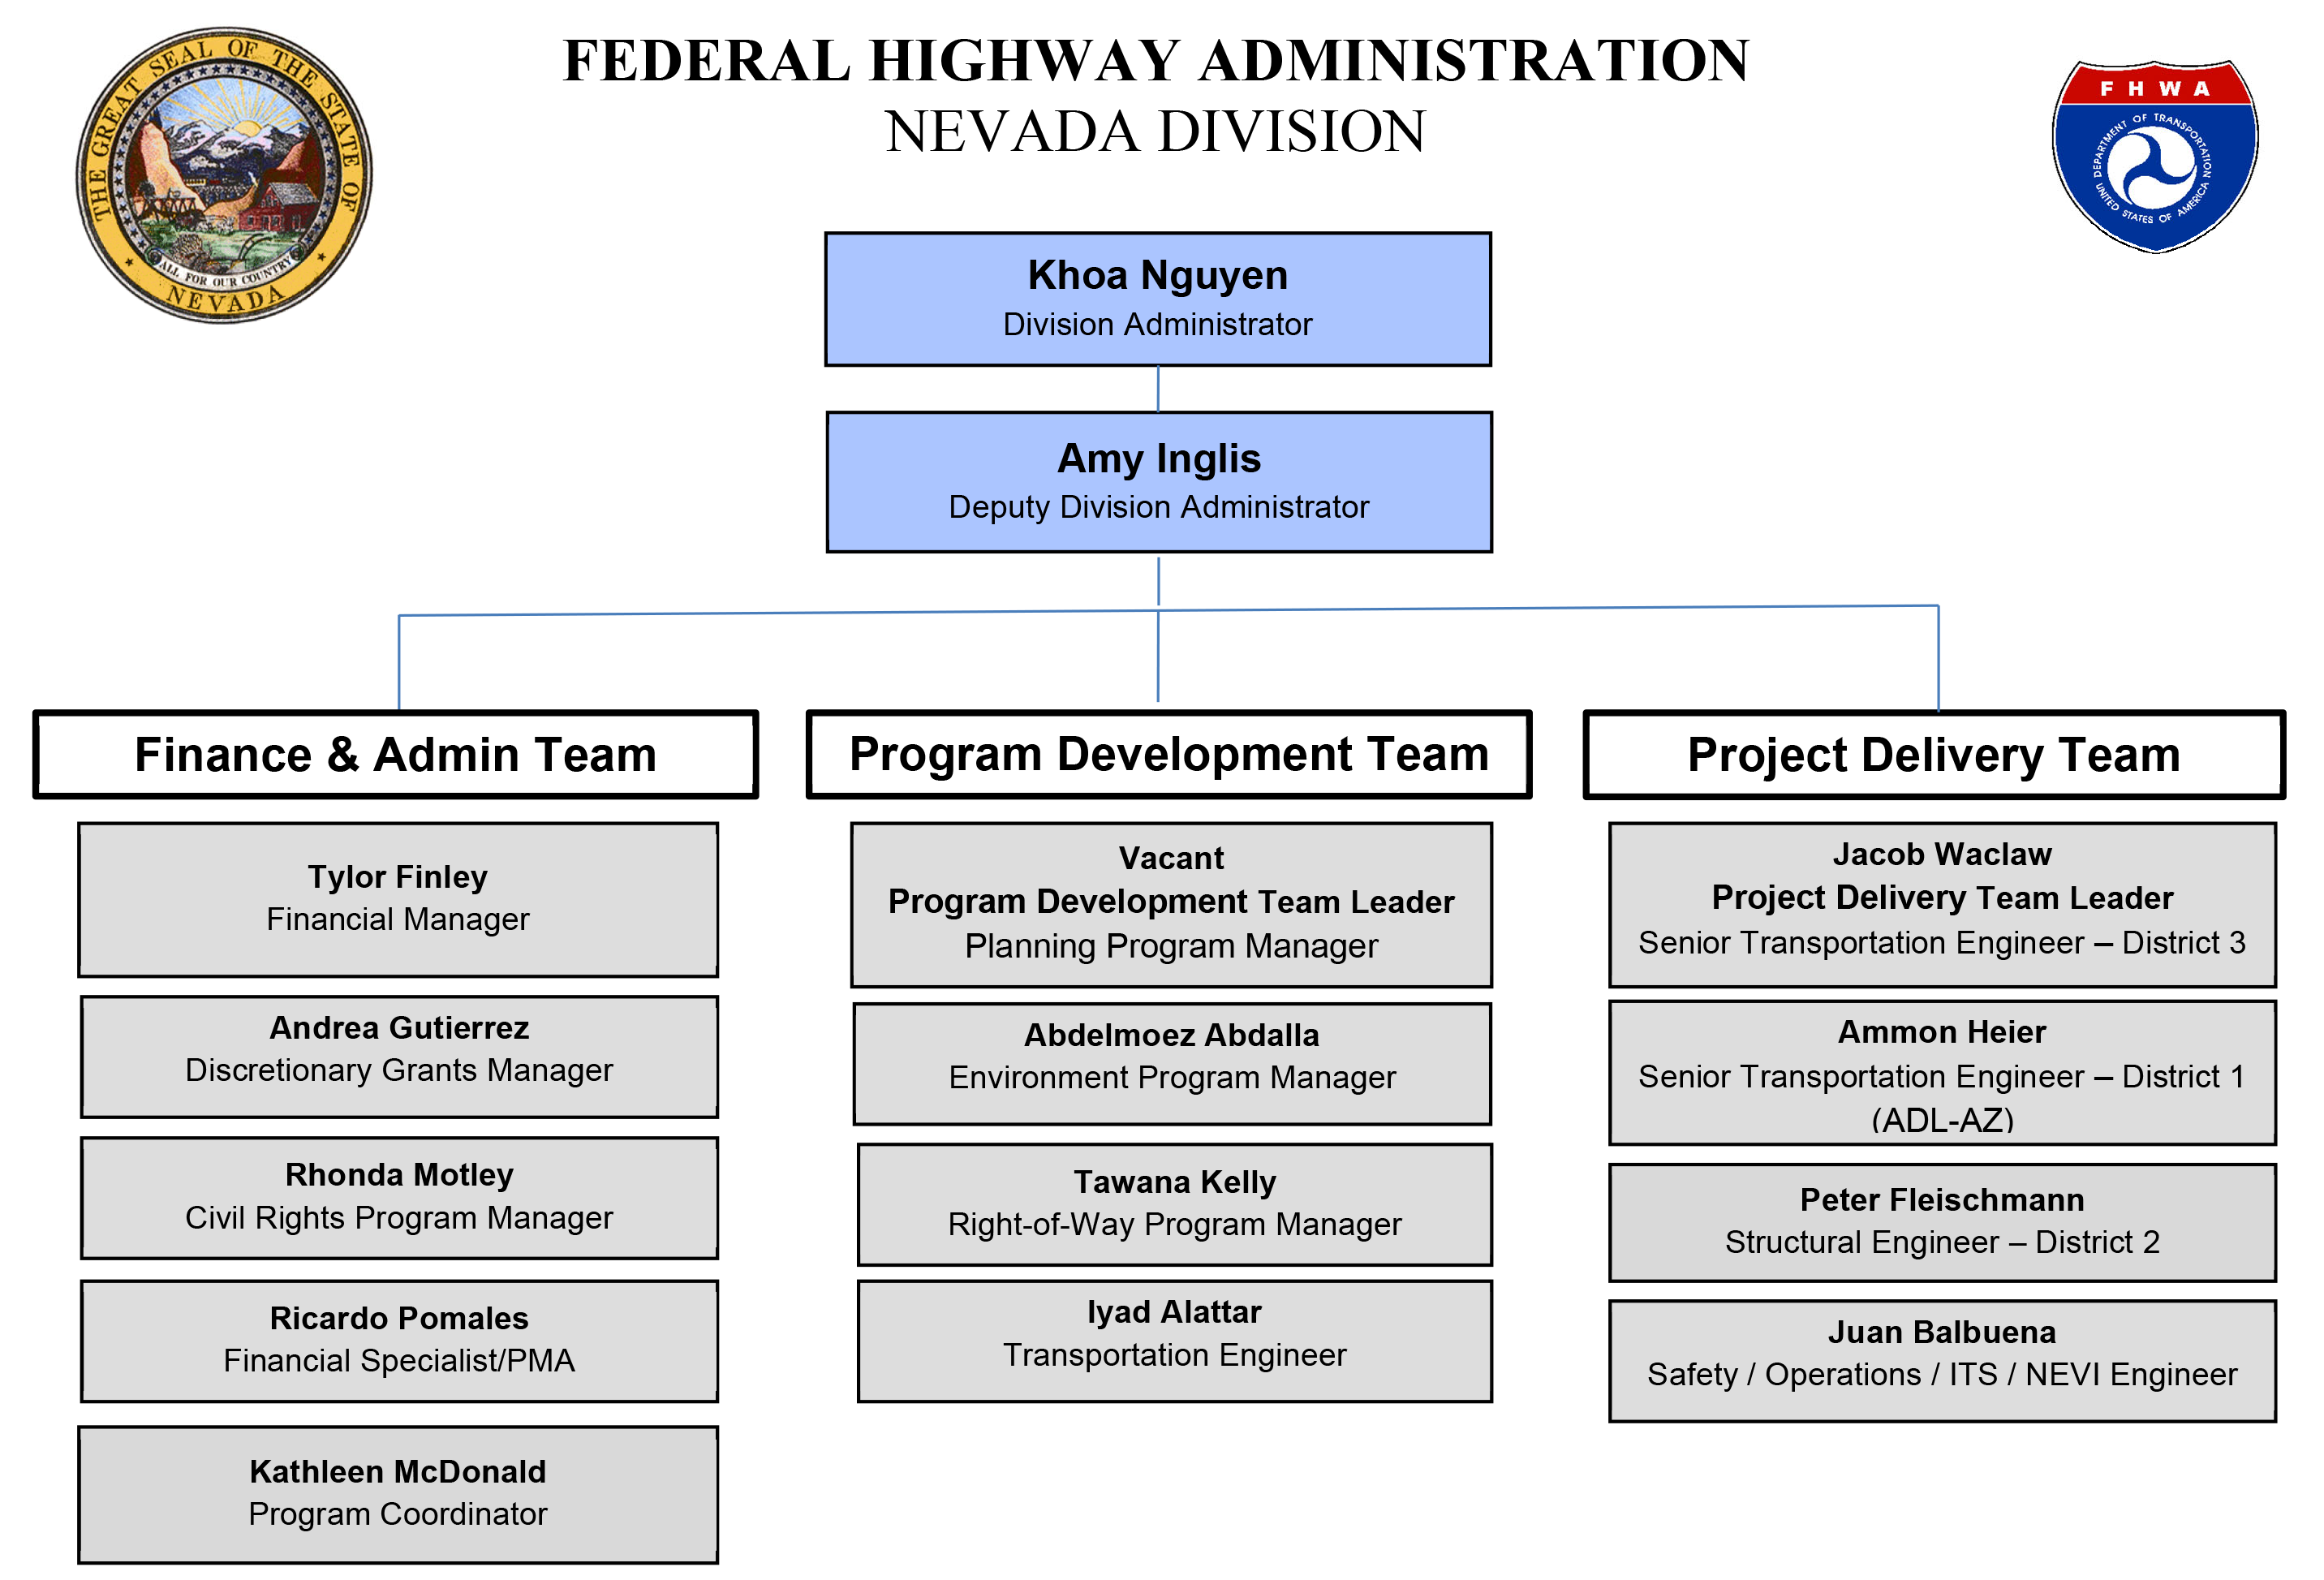 FHWA Nevada Division Organizational Chart